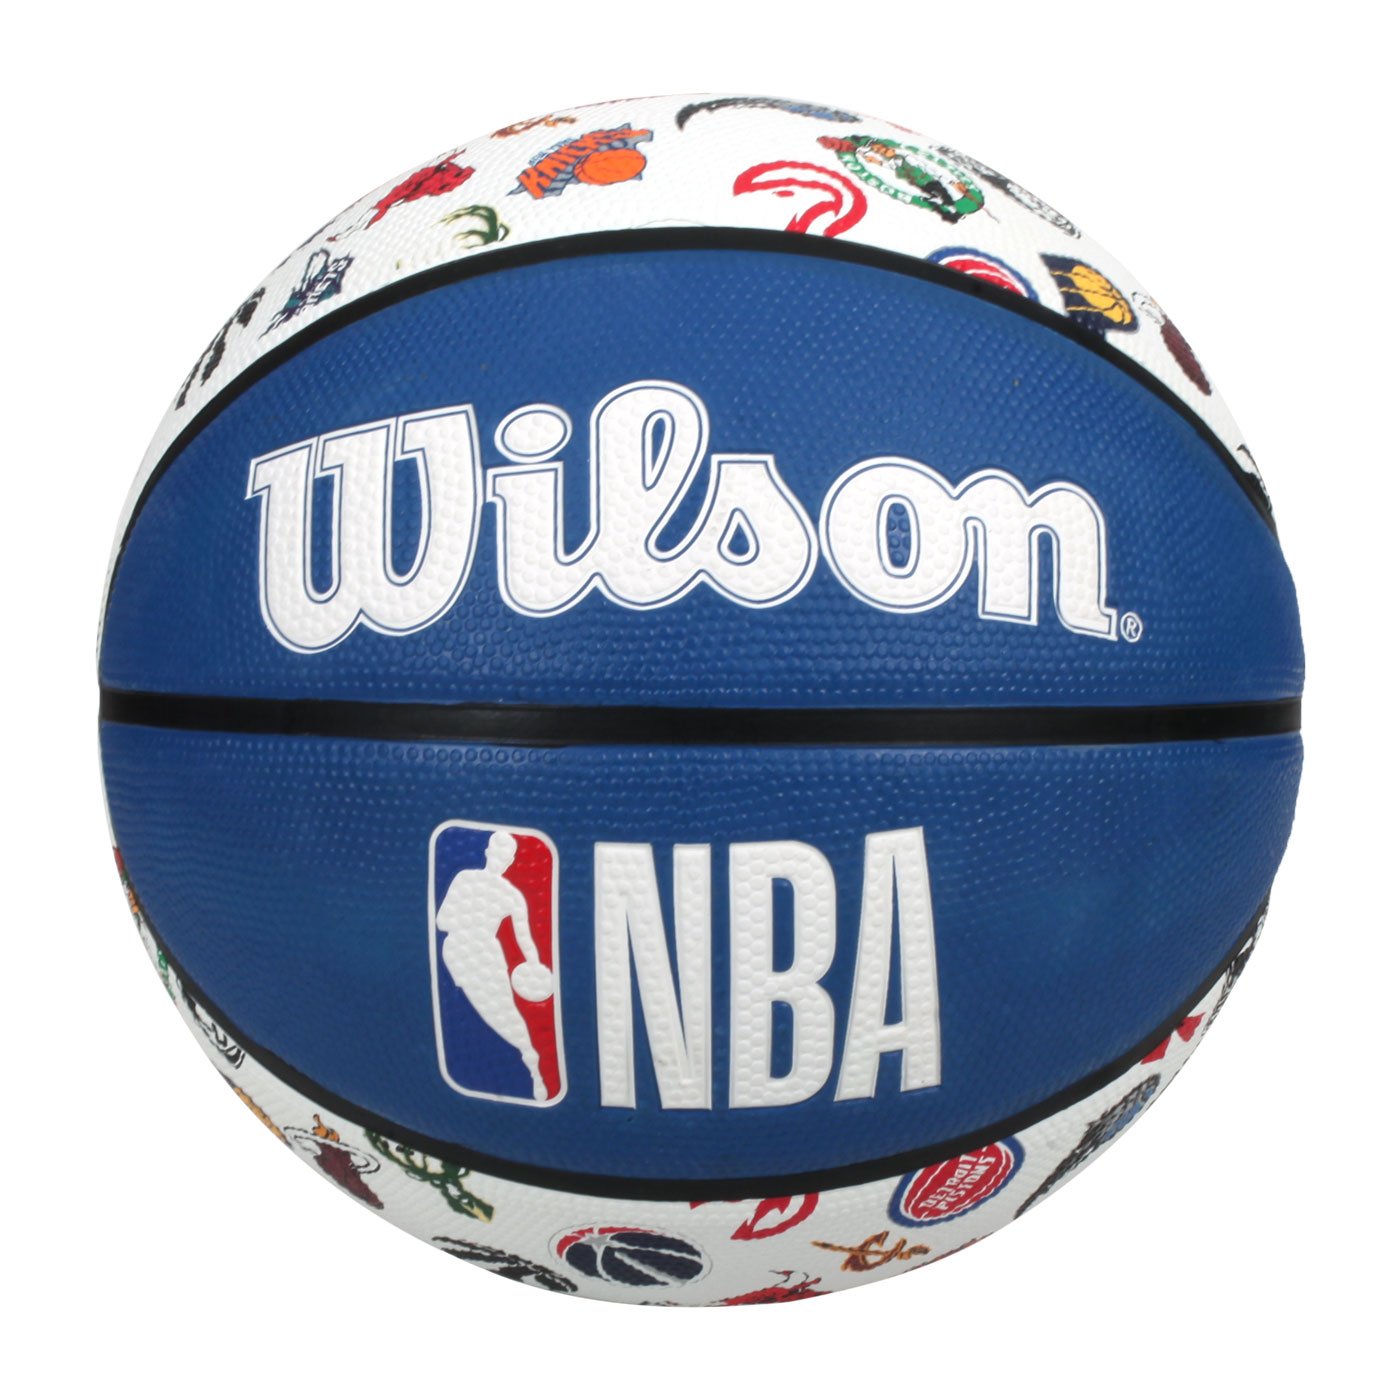 WILSON NBA ALL TEAM 隊徽橡膠籃球#7 WTB1301XBNBA - 白紅藍黃綠